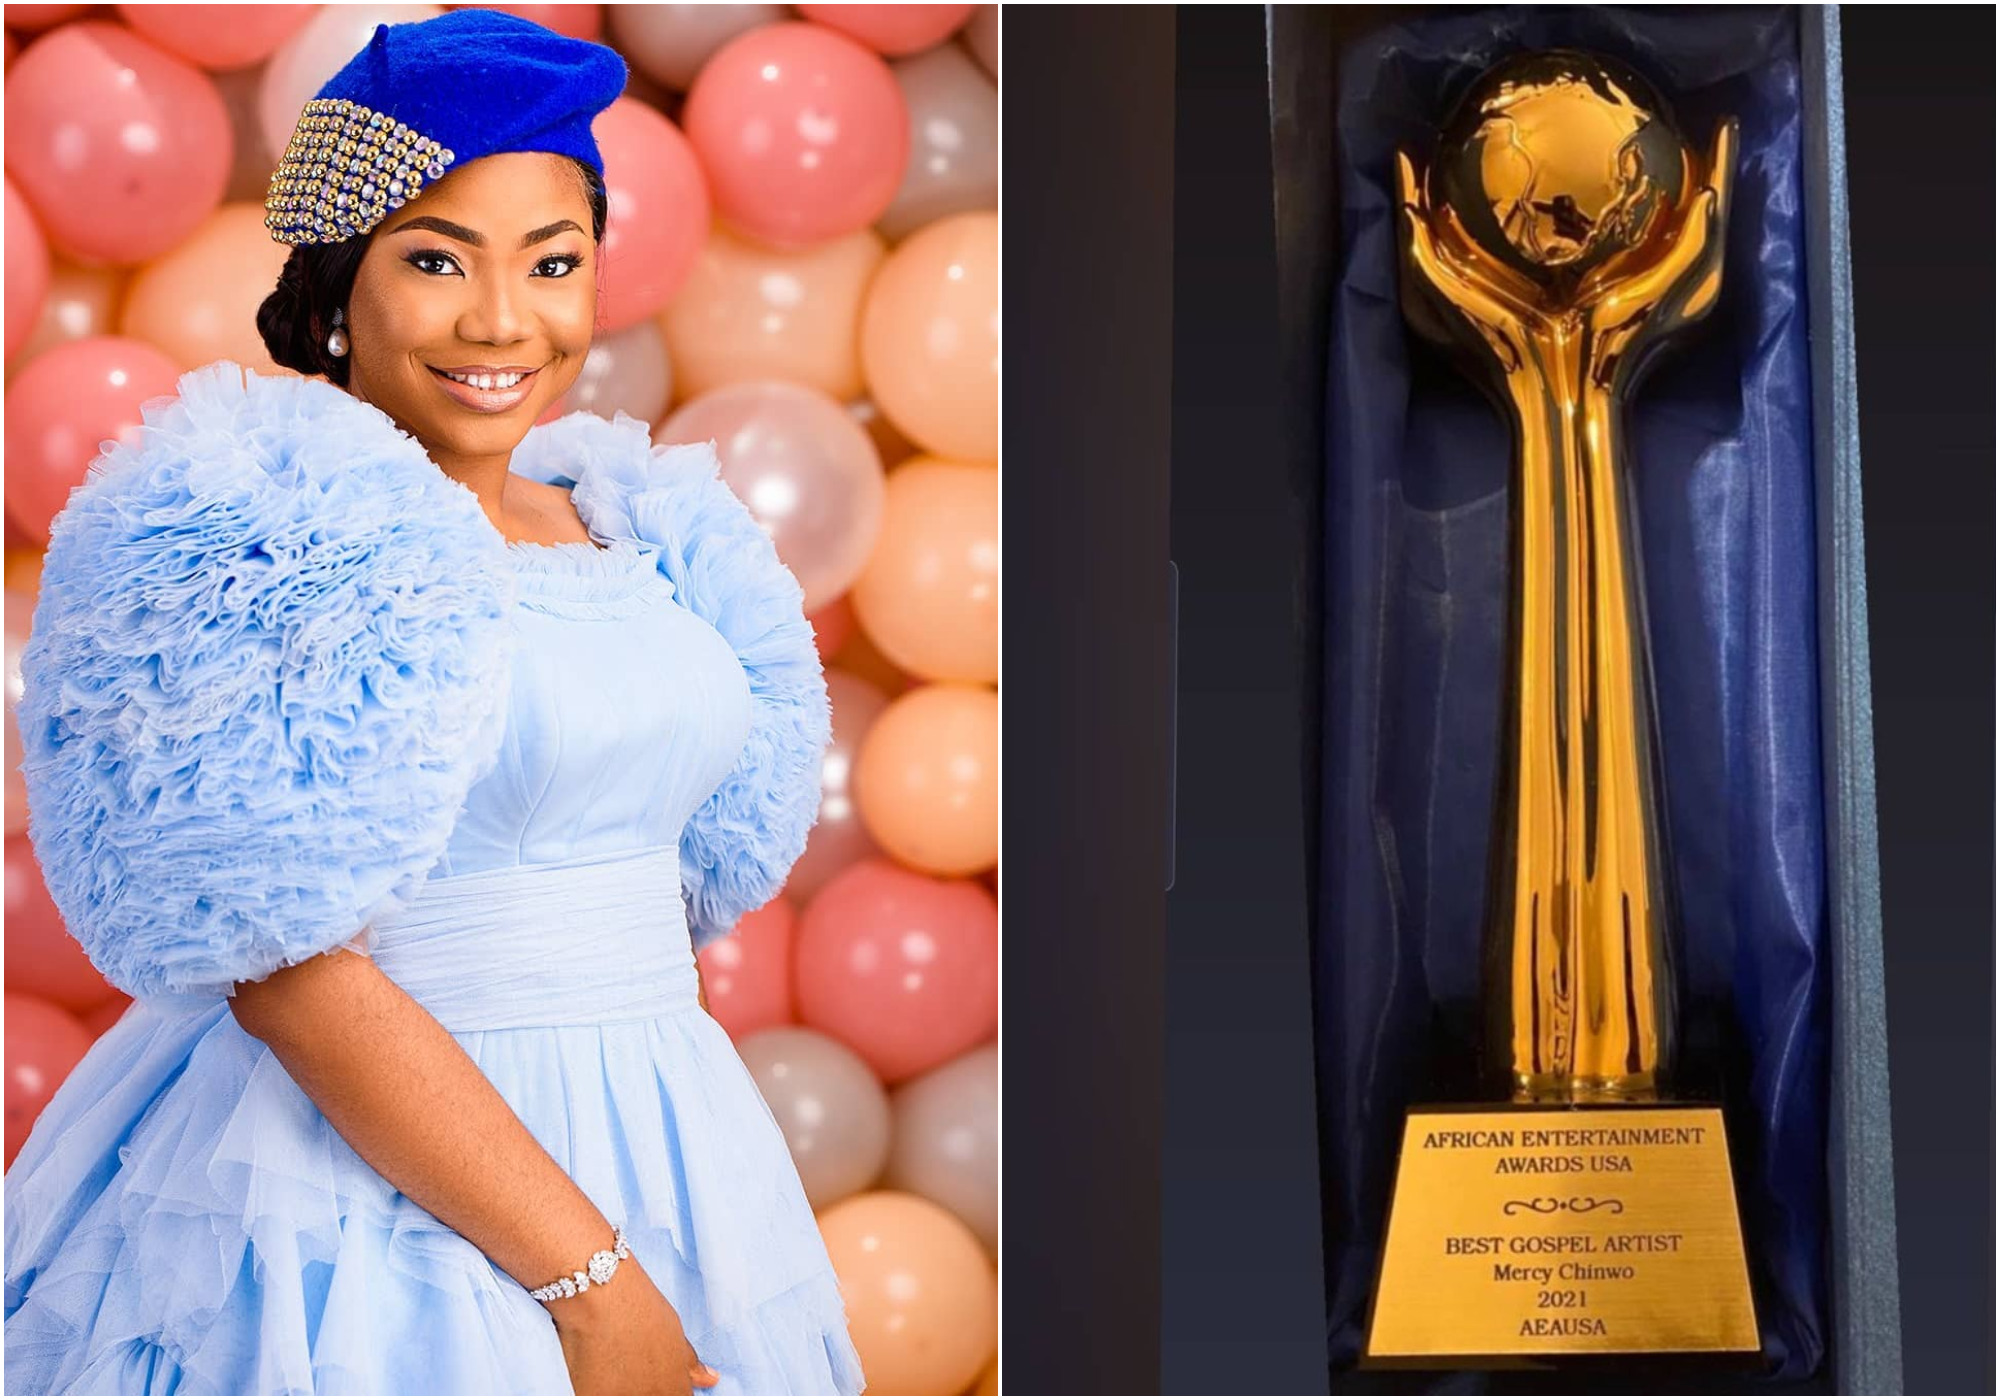 Mercy Chinwo Wins Best Gospel Artiste 2021 From African Entertainment Awards